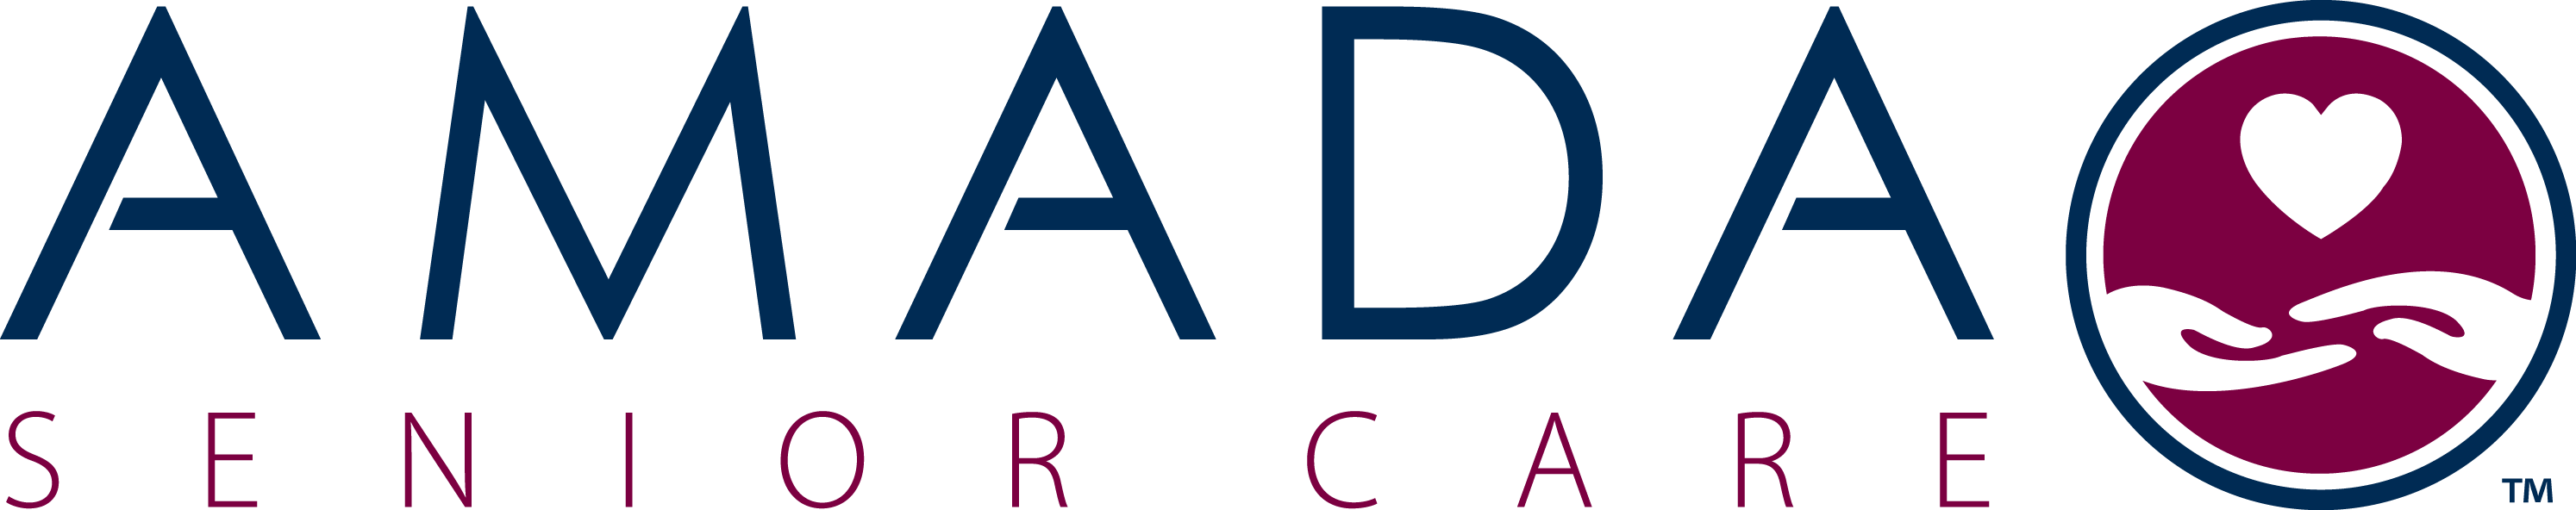 Senior Care Logo - Amada Senior Care: In-Home Senior Care and More